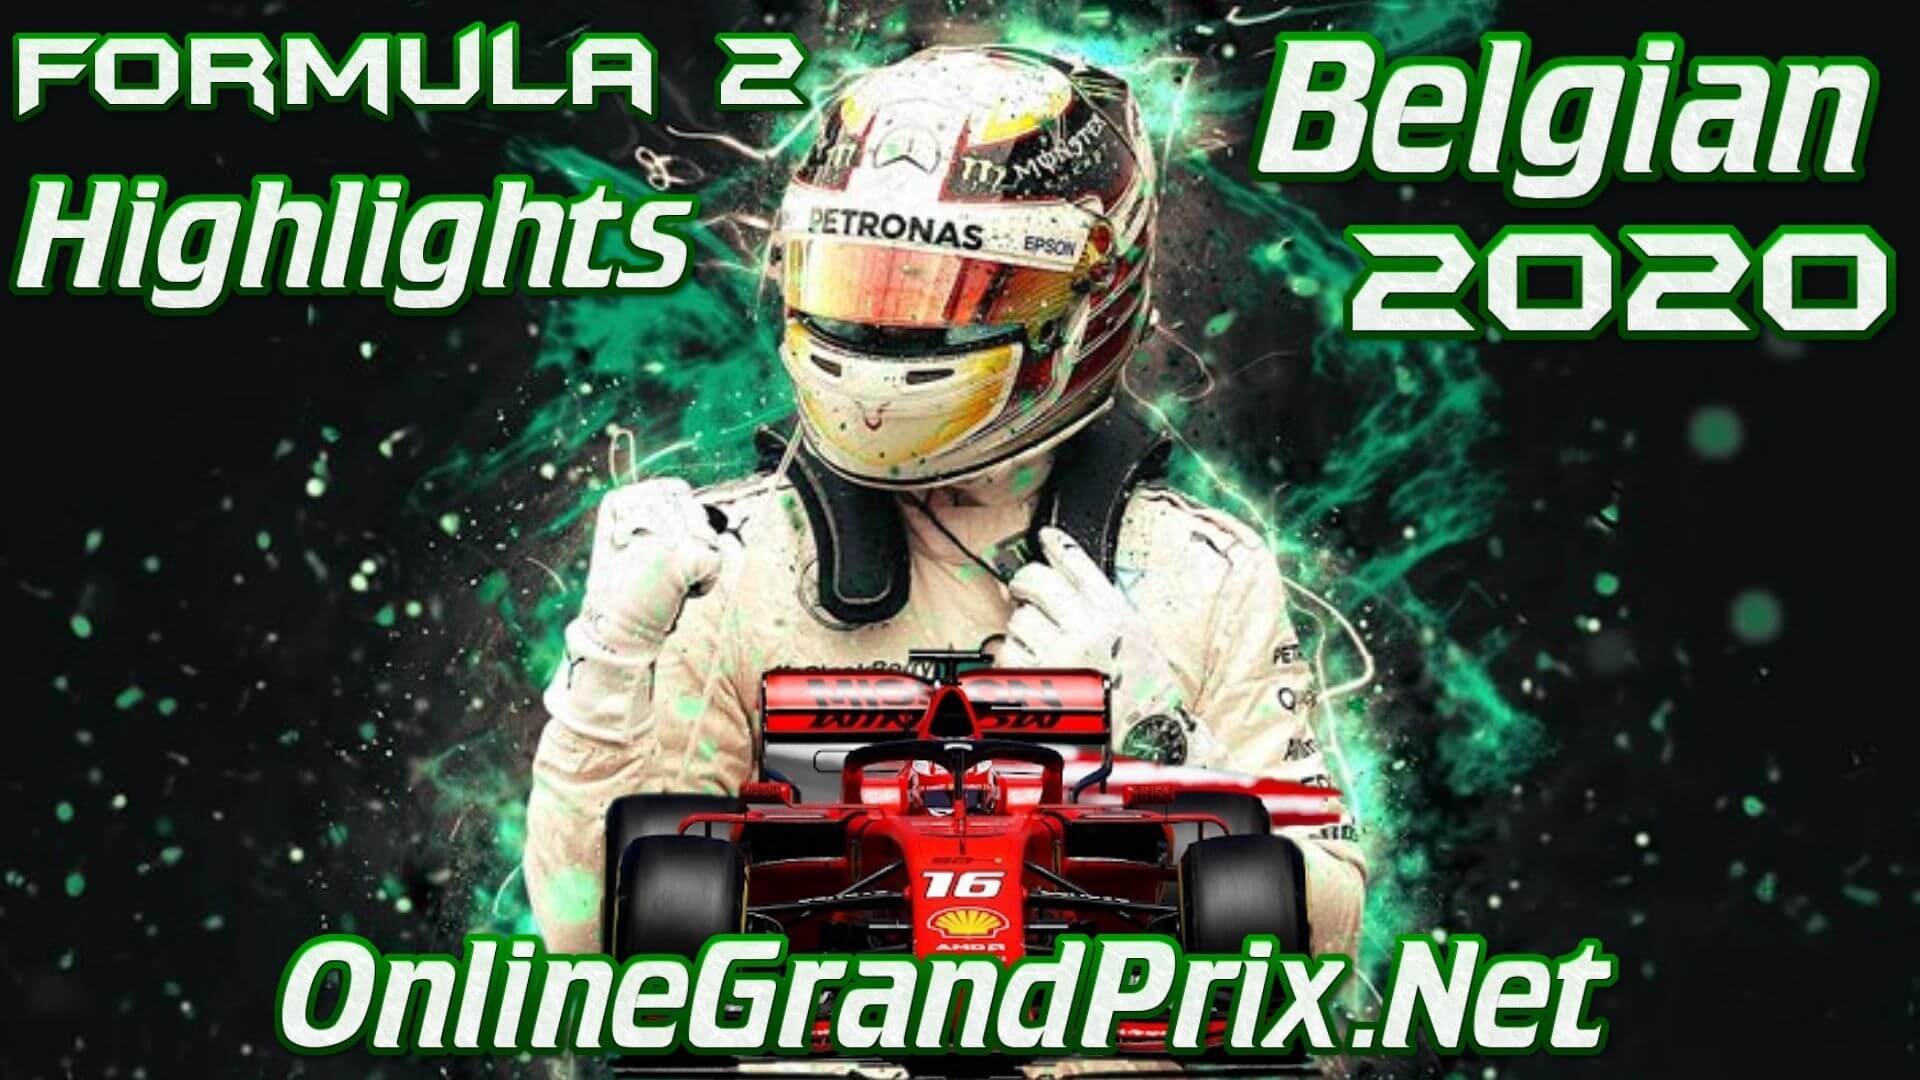 Belgian GP F2 Highlights 2020